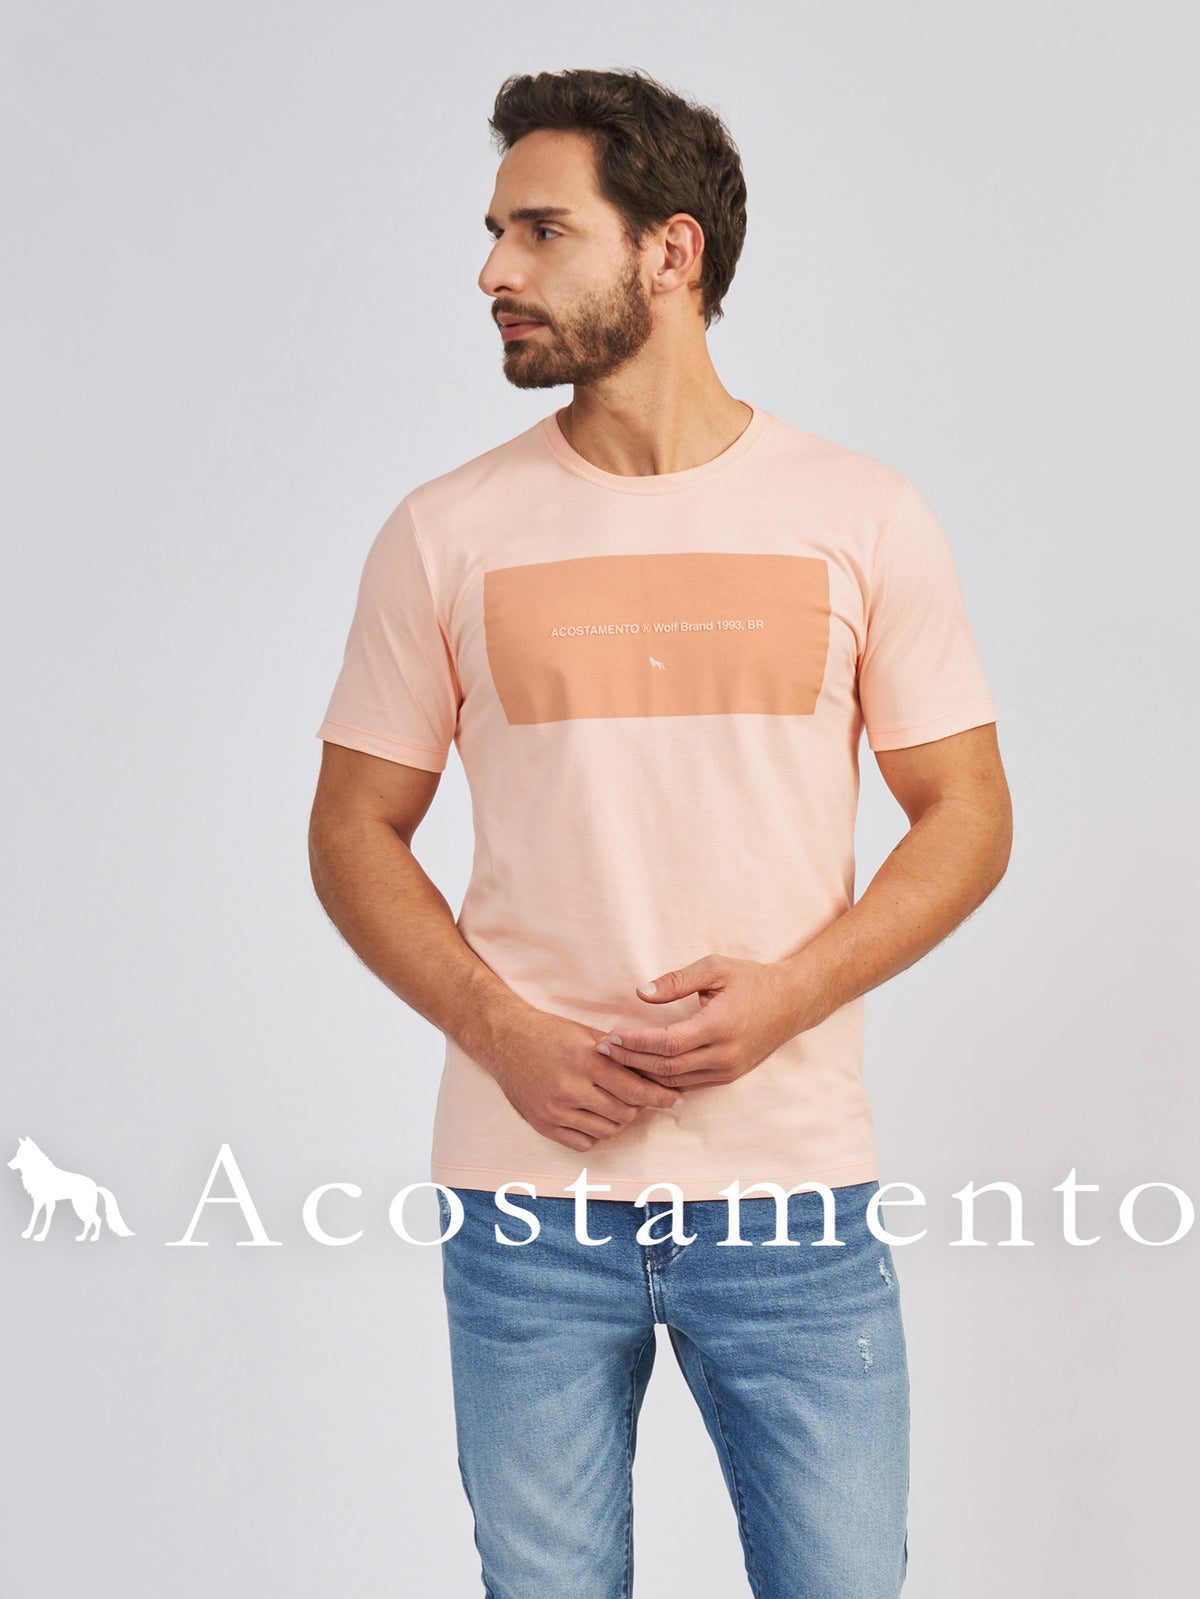 Camiseta Wolf Brand Acostamento - Hellik Store